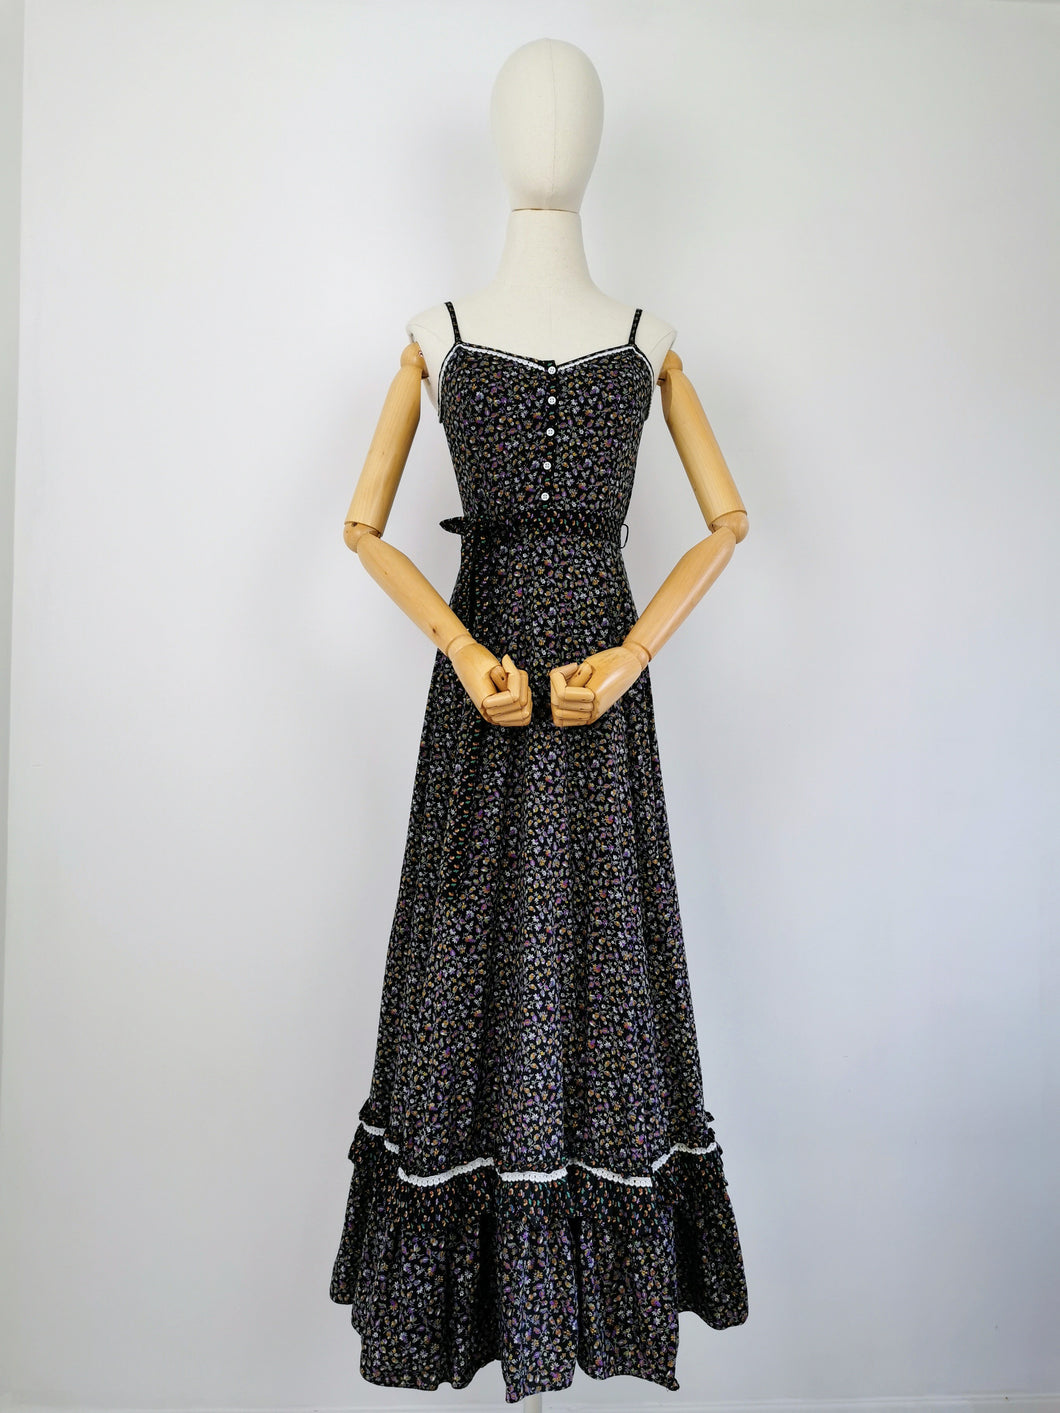 Vintage 70s Betty Barclay prairie dress